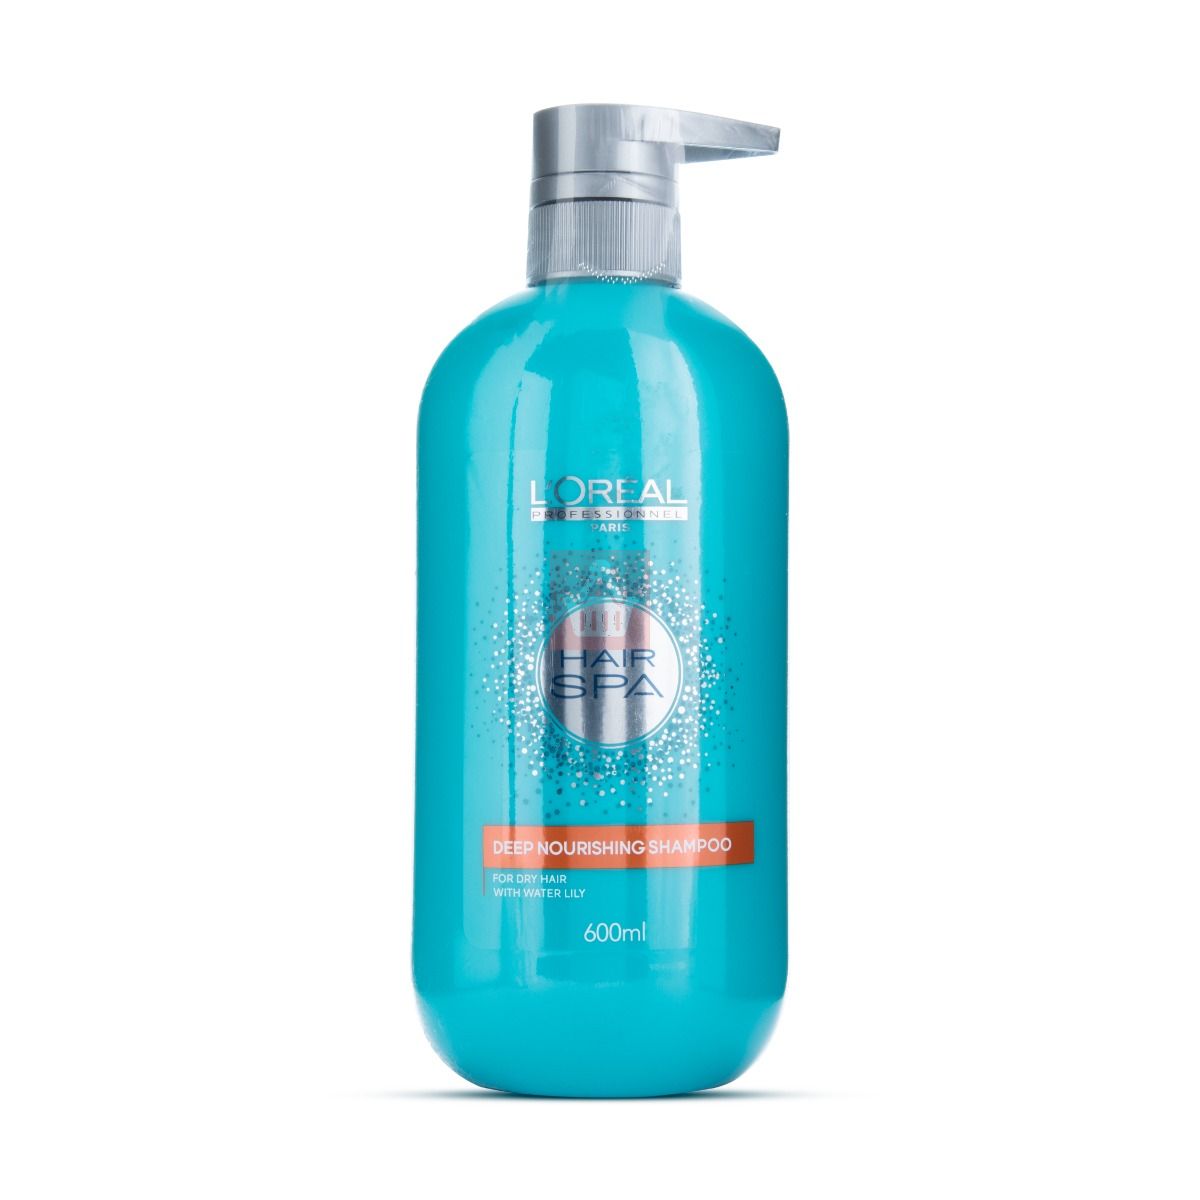 Loreal Professional Hair Spa Deep Nourishing Shampoo 600ml